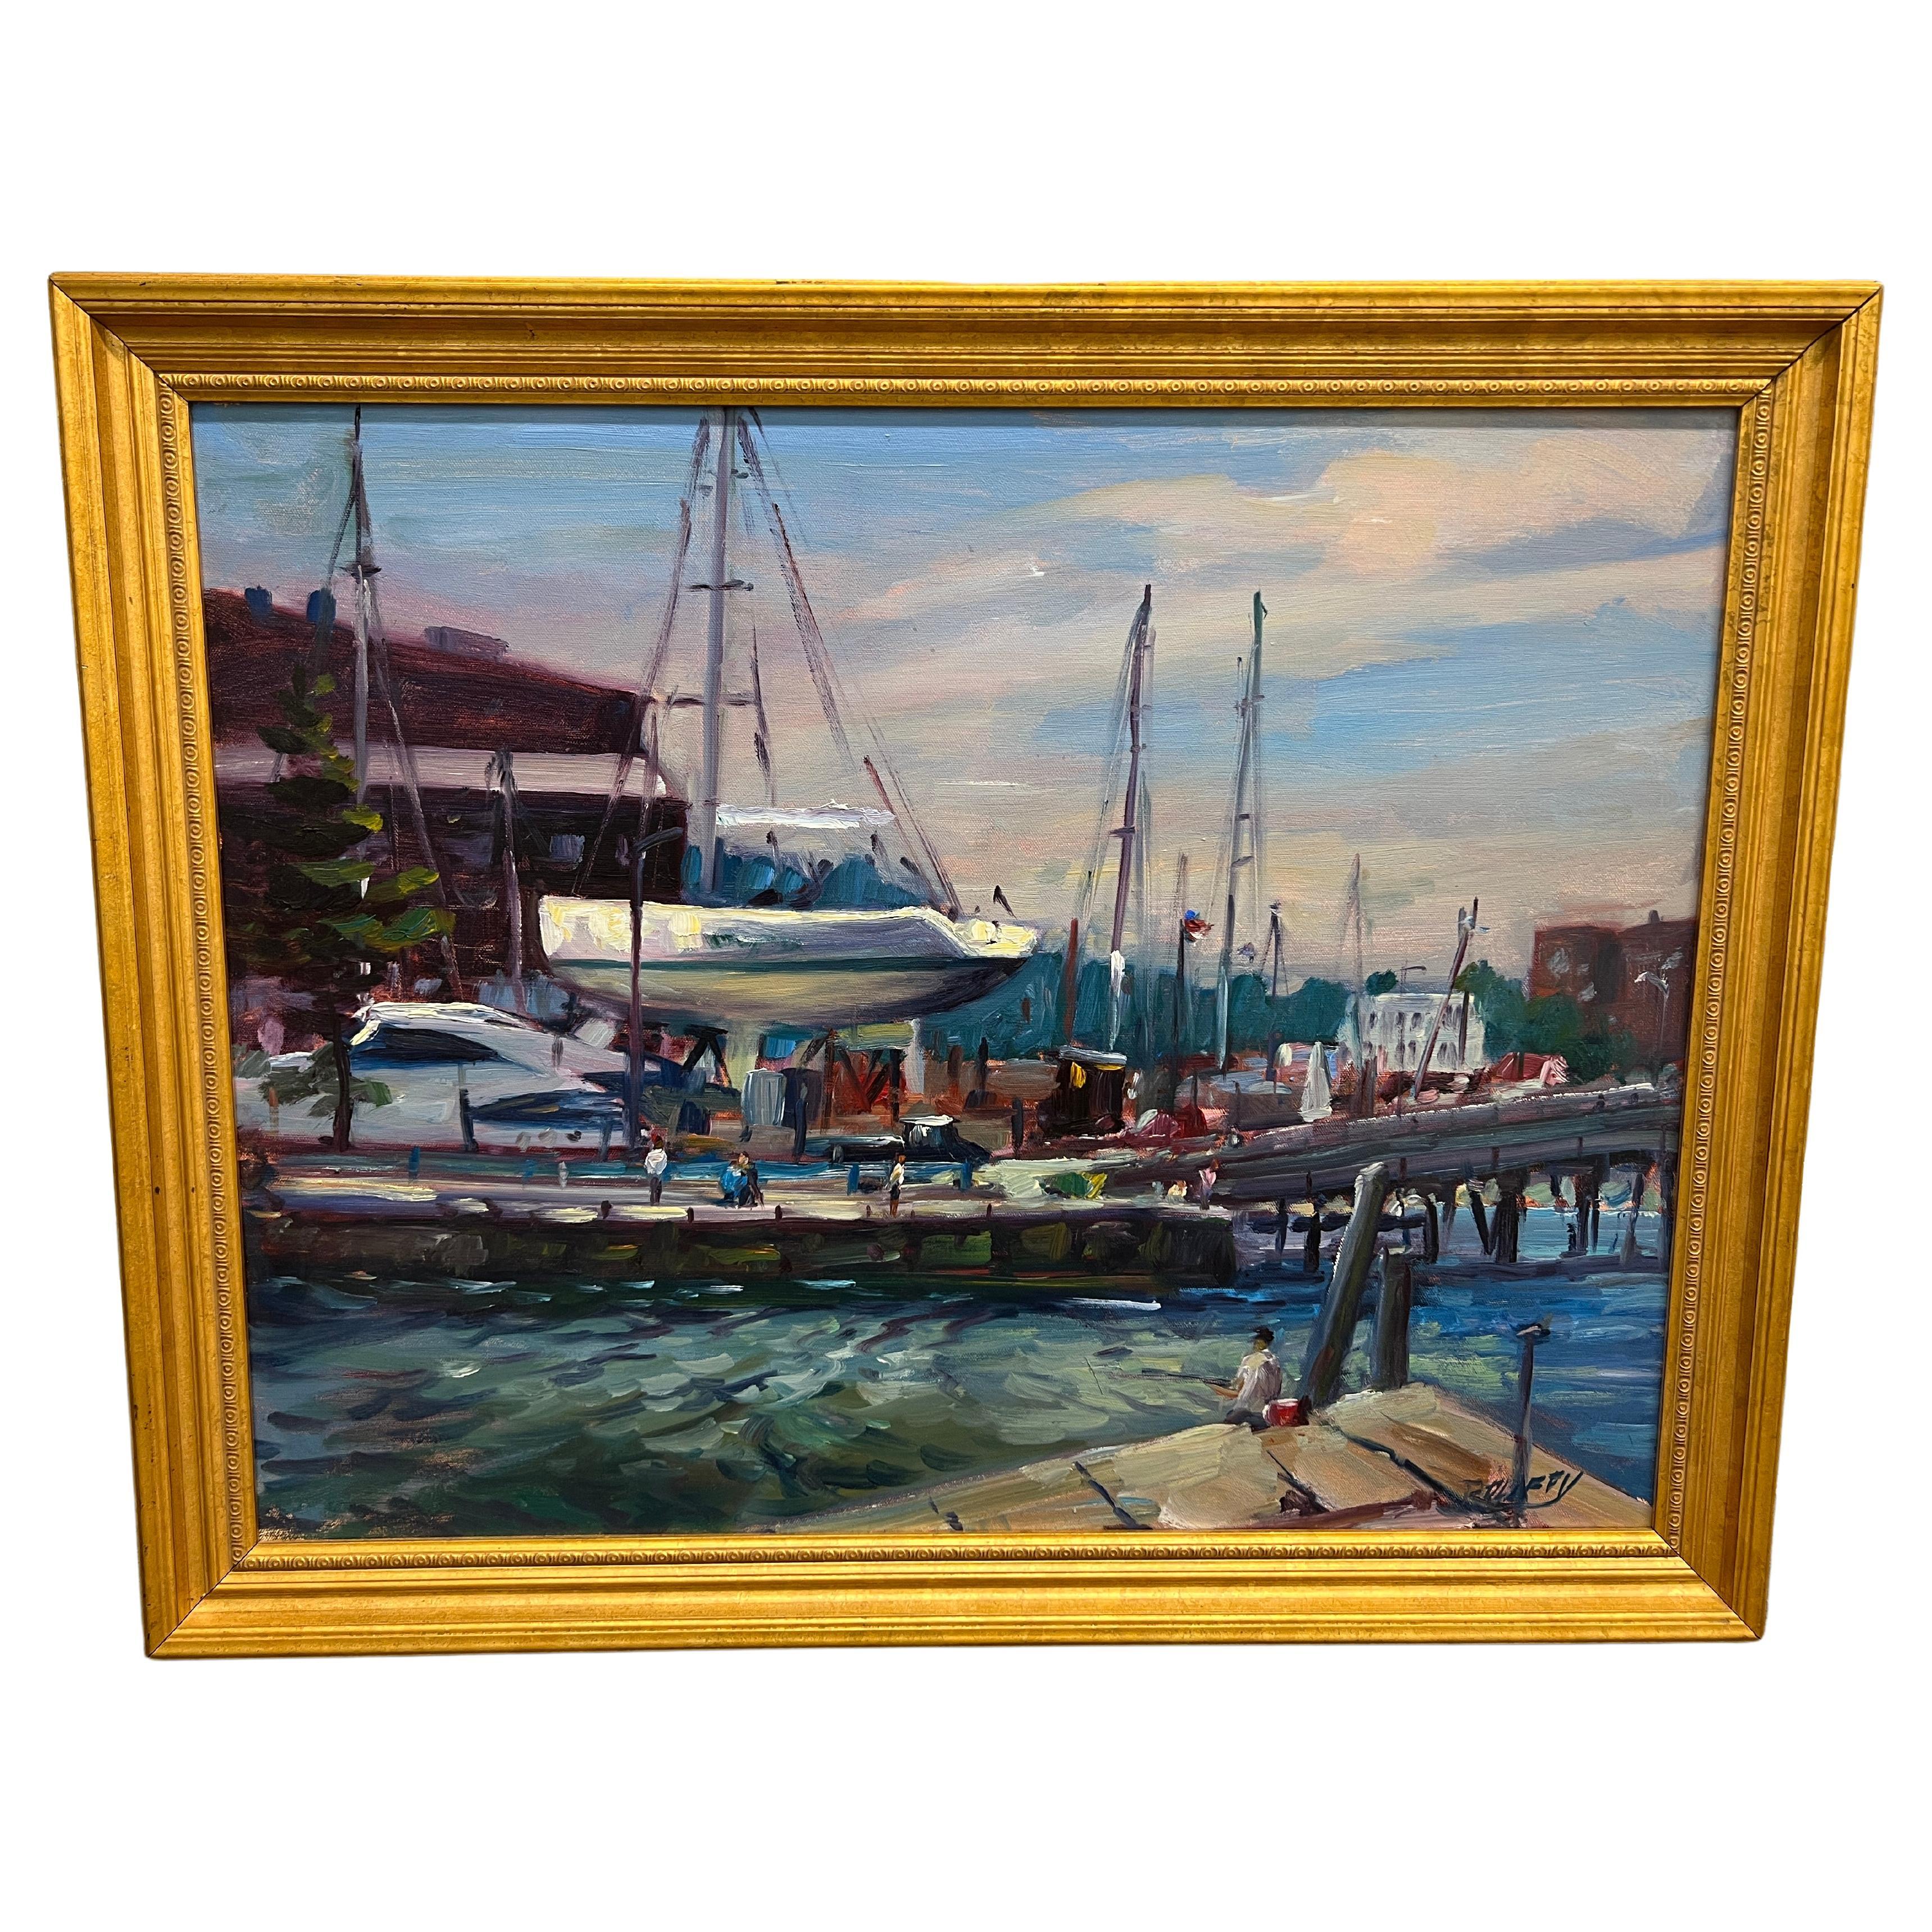 Robert Duffy (American, 1928-2015), Painting of a Harbor Fisherman in Newport